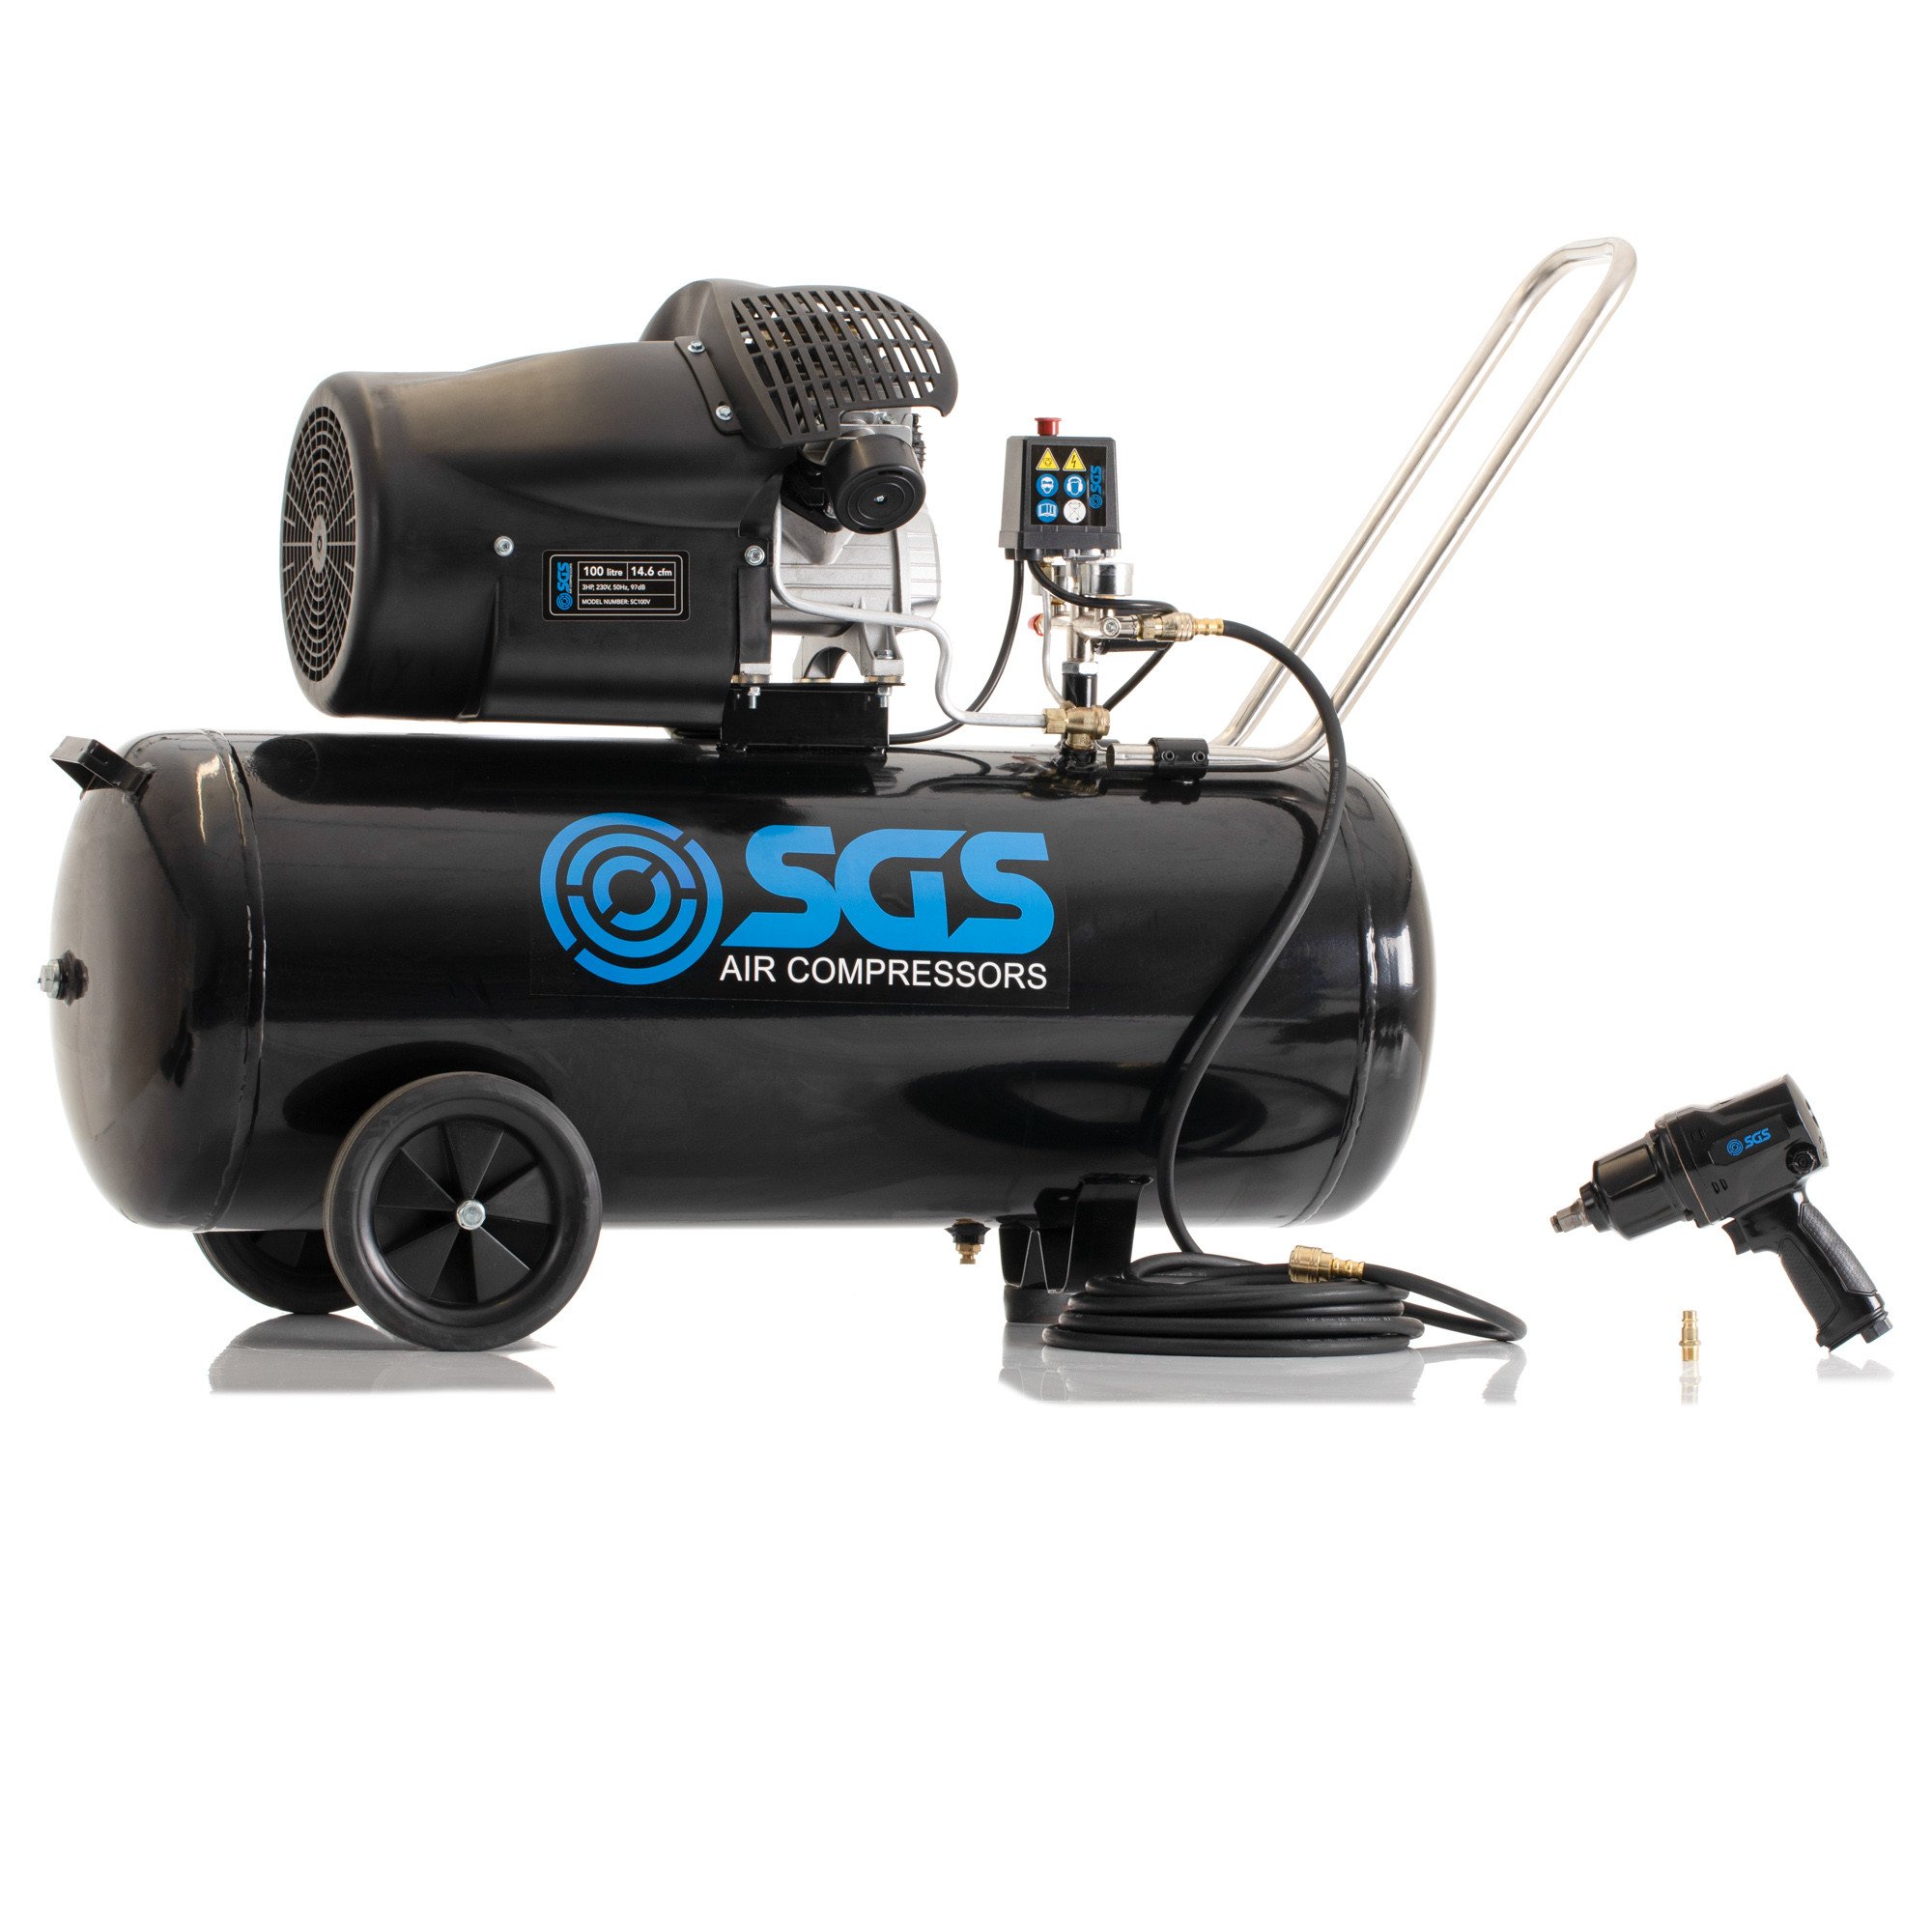 SGS 100升直接驱动空气压缩机和880Nm空气冲击扳手套件- 14.6CFM 3.0HP 100L